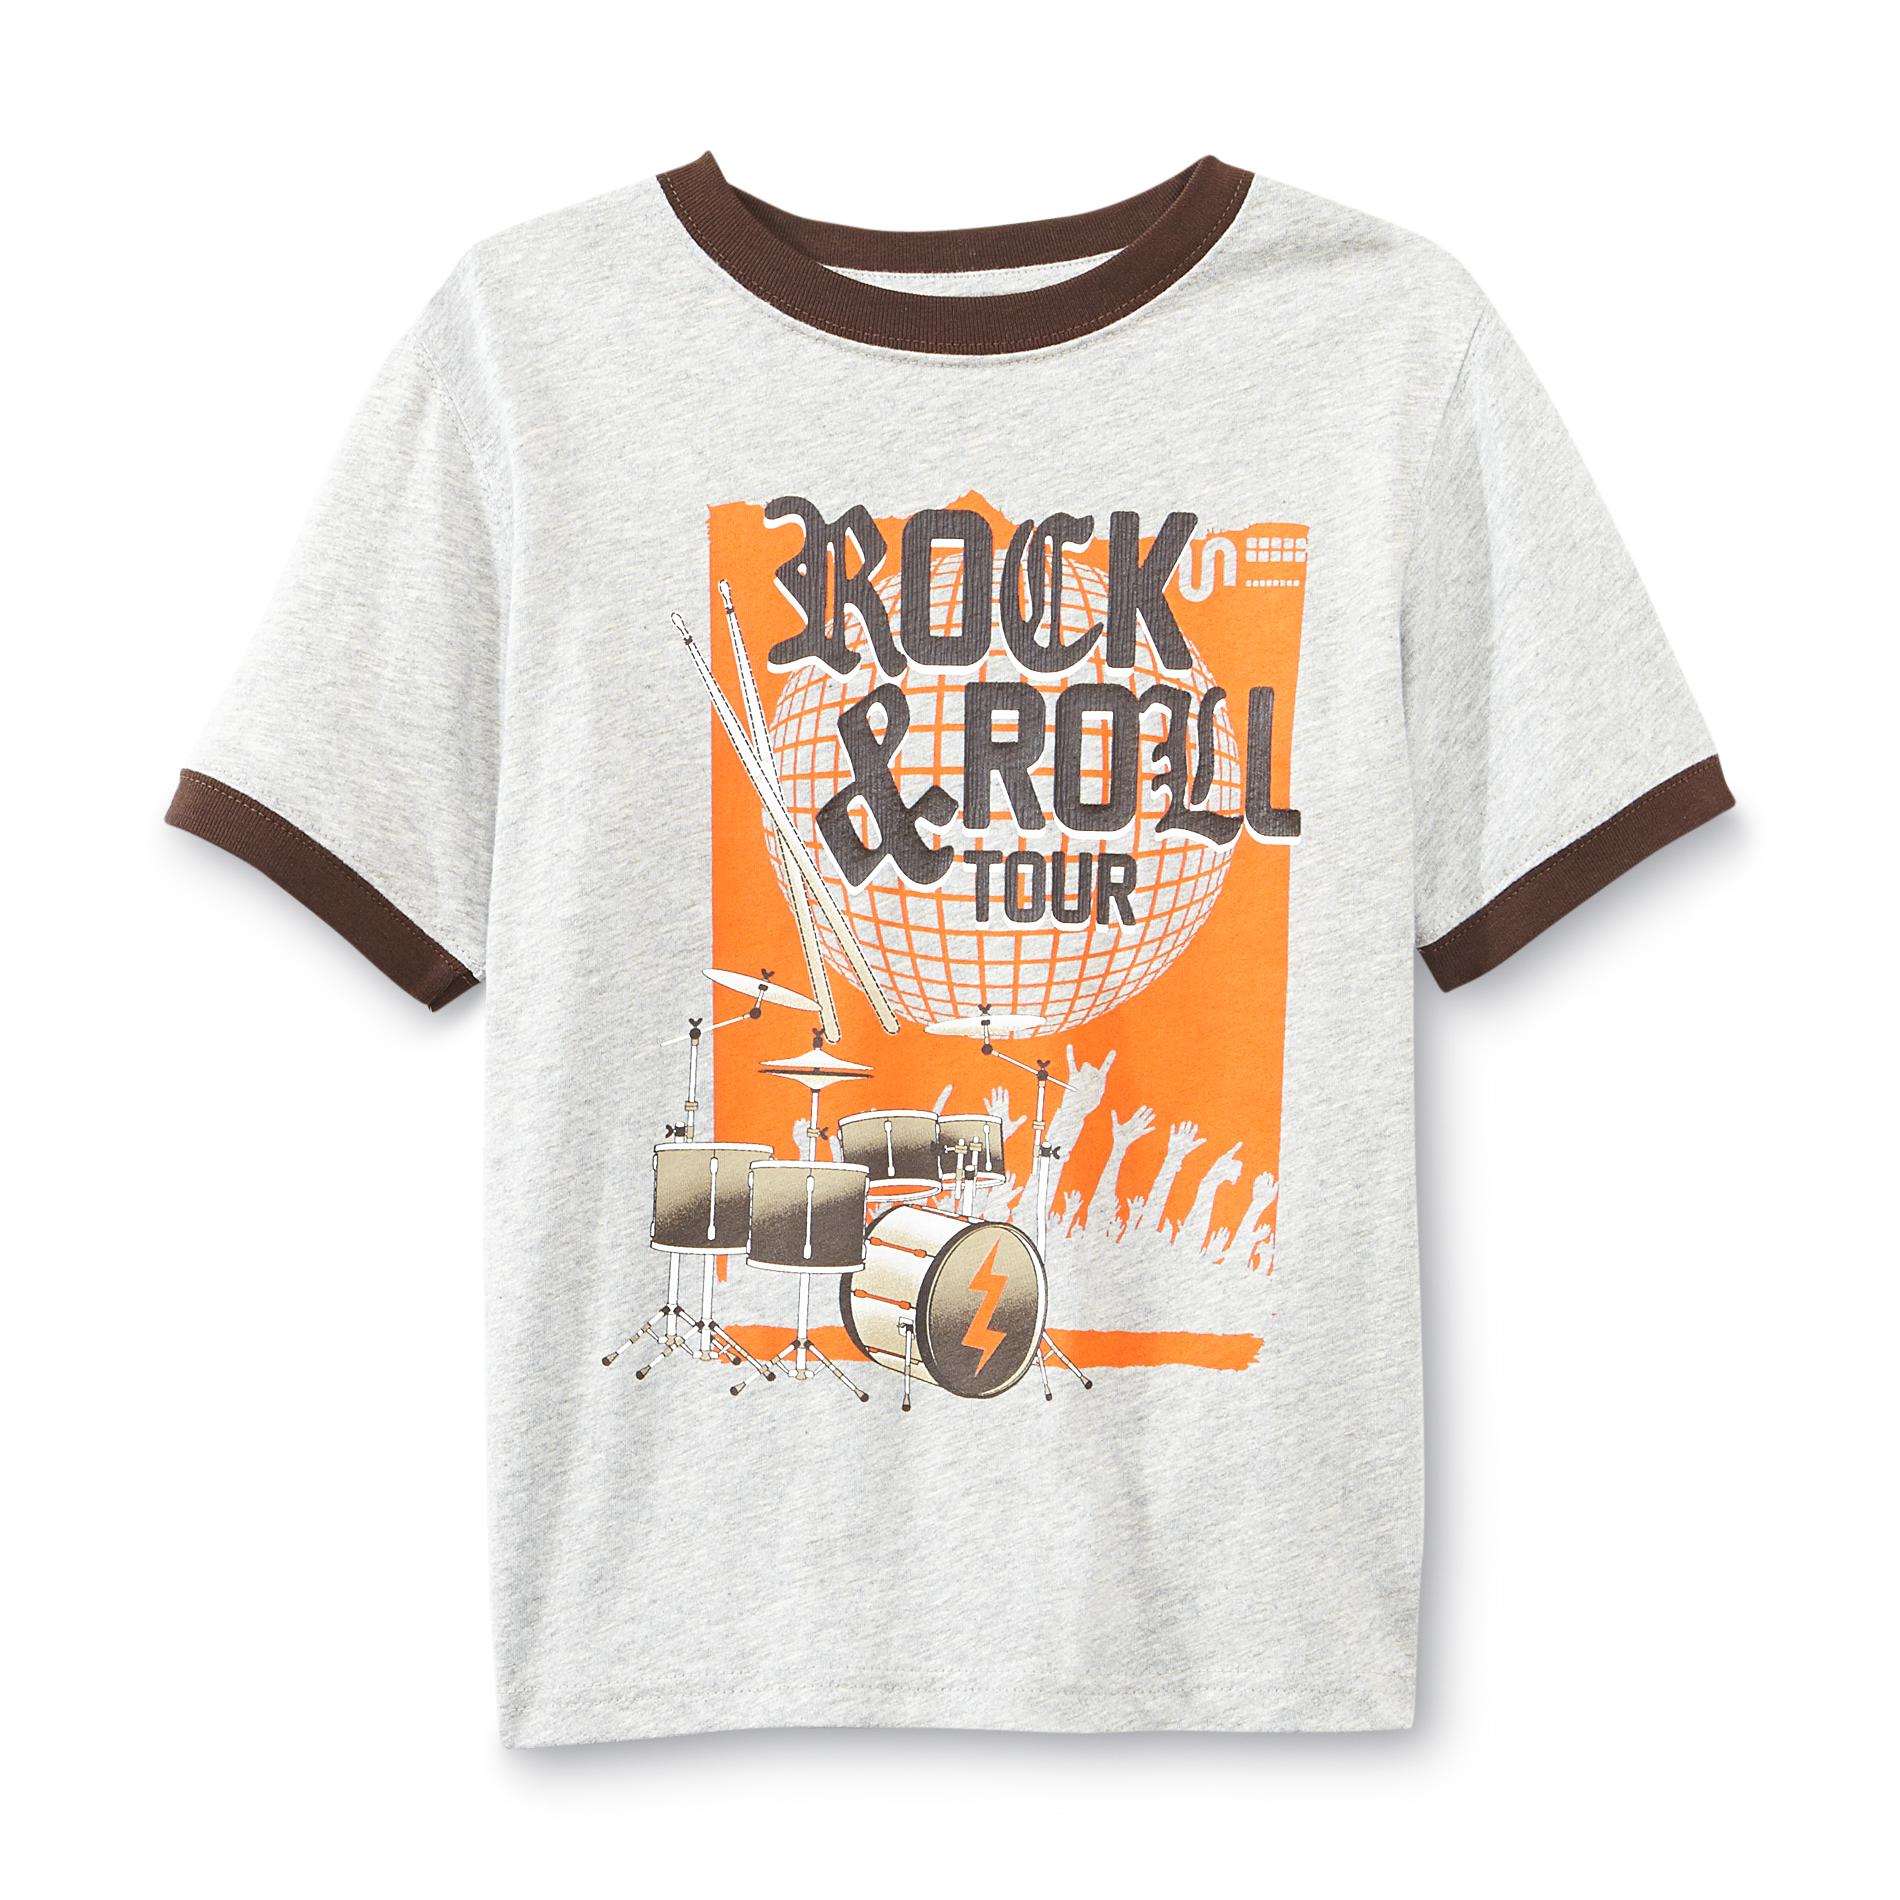 Toughskins Boy's Graphic T-Shirt - Rock & Roll Tour